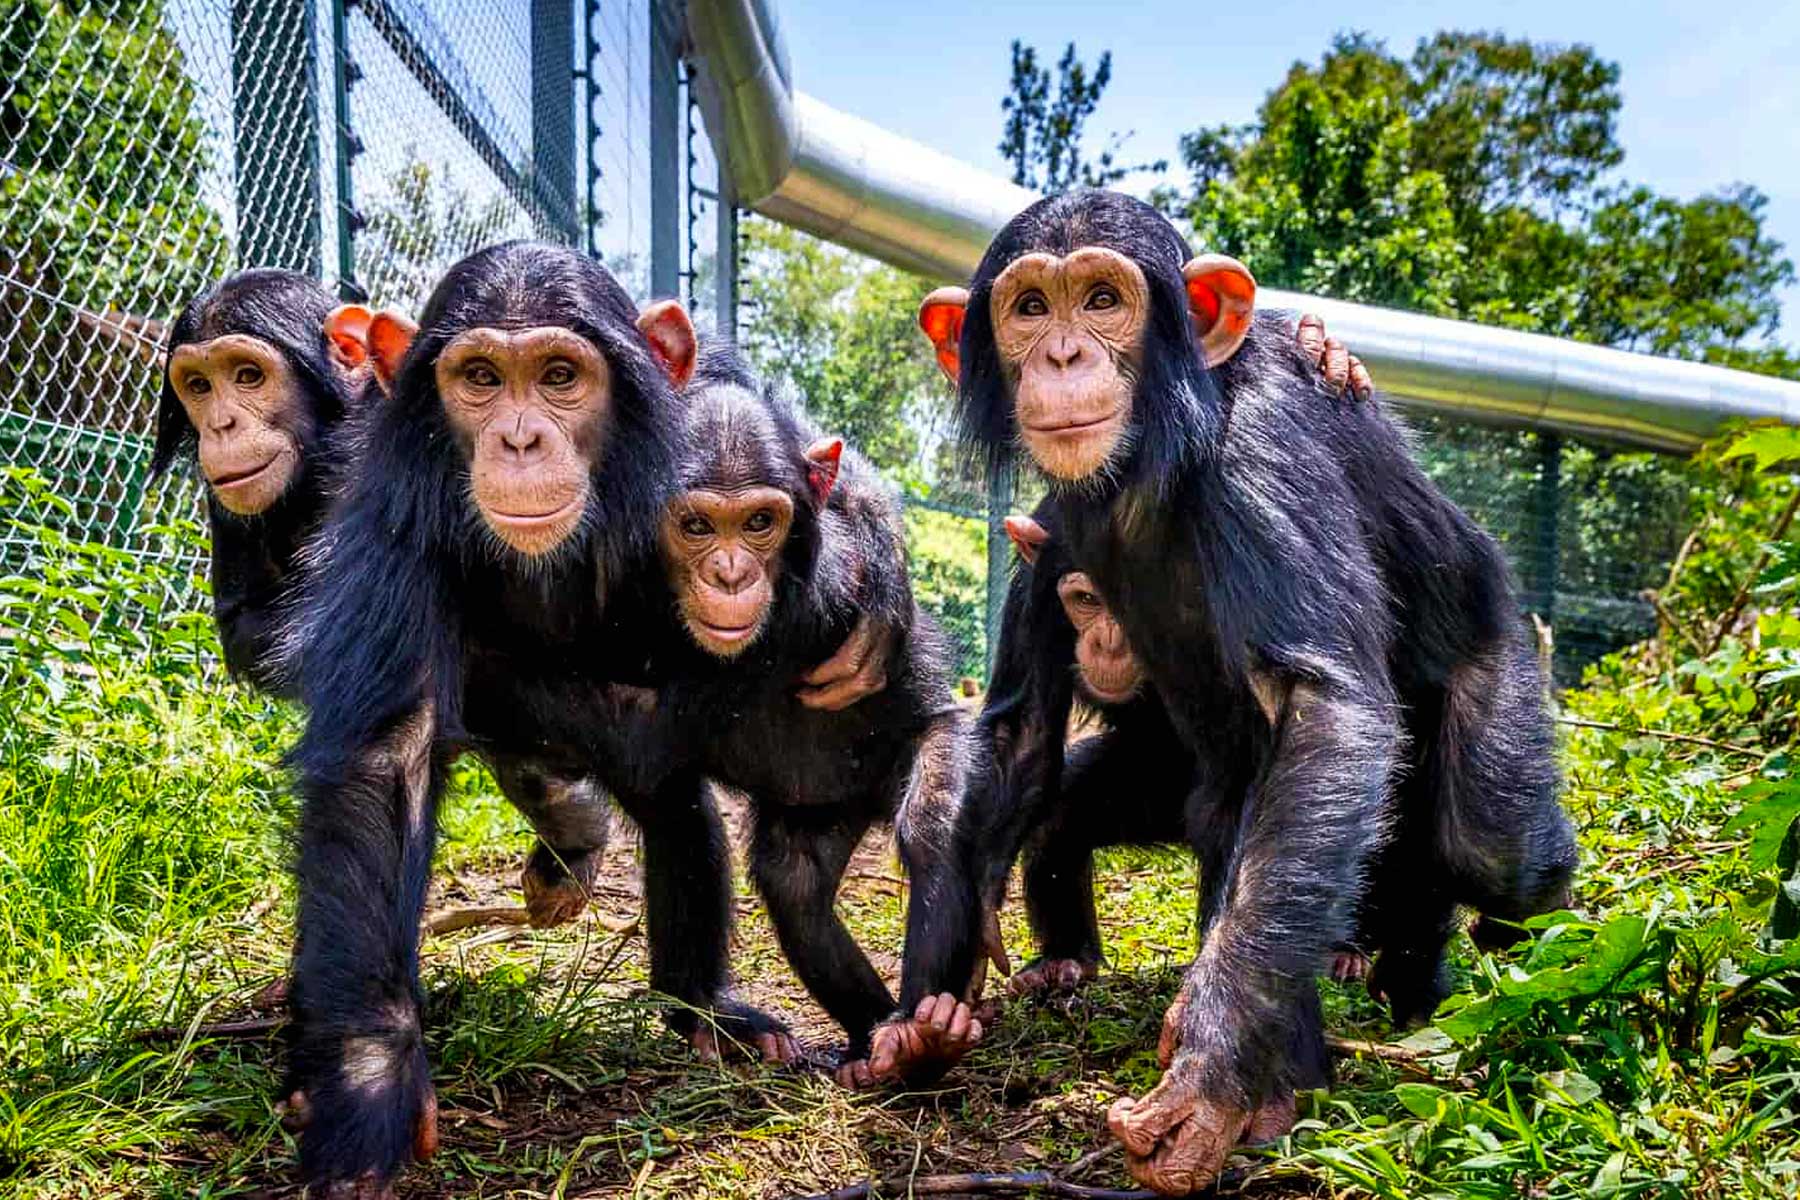 Lwiro Chimpanzee Sanctuary